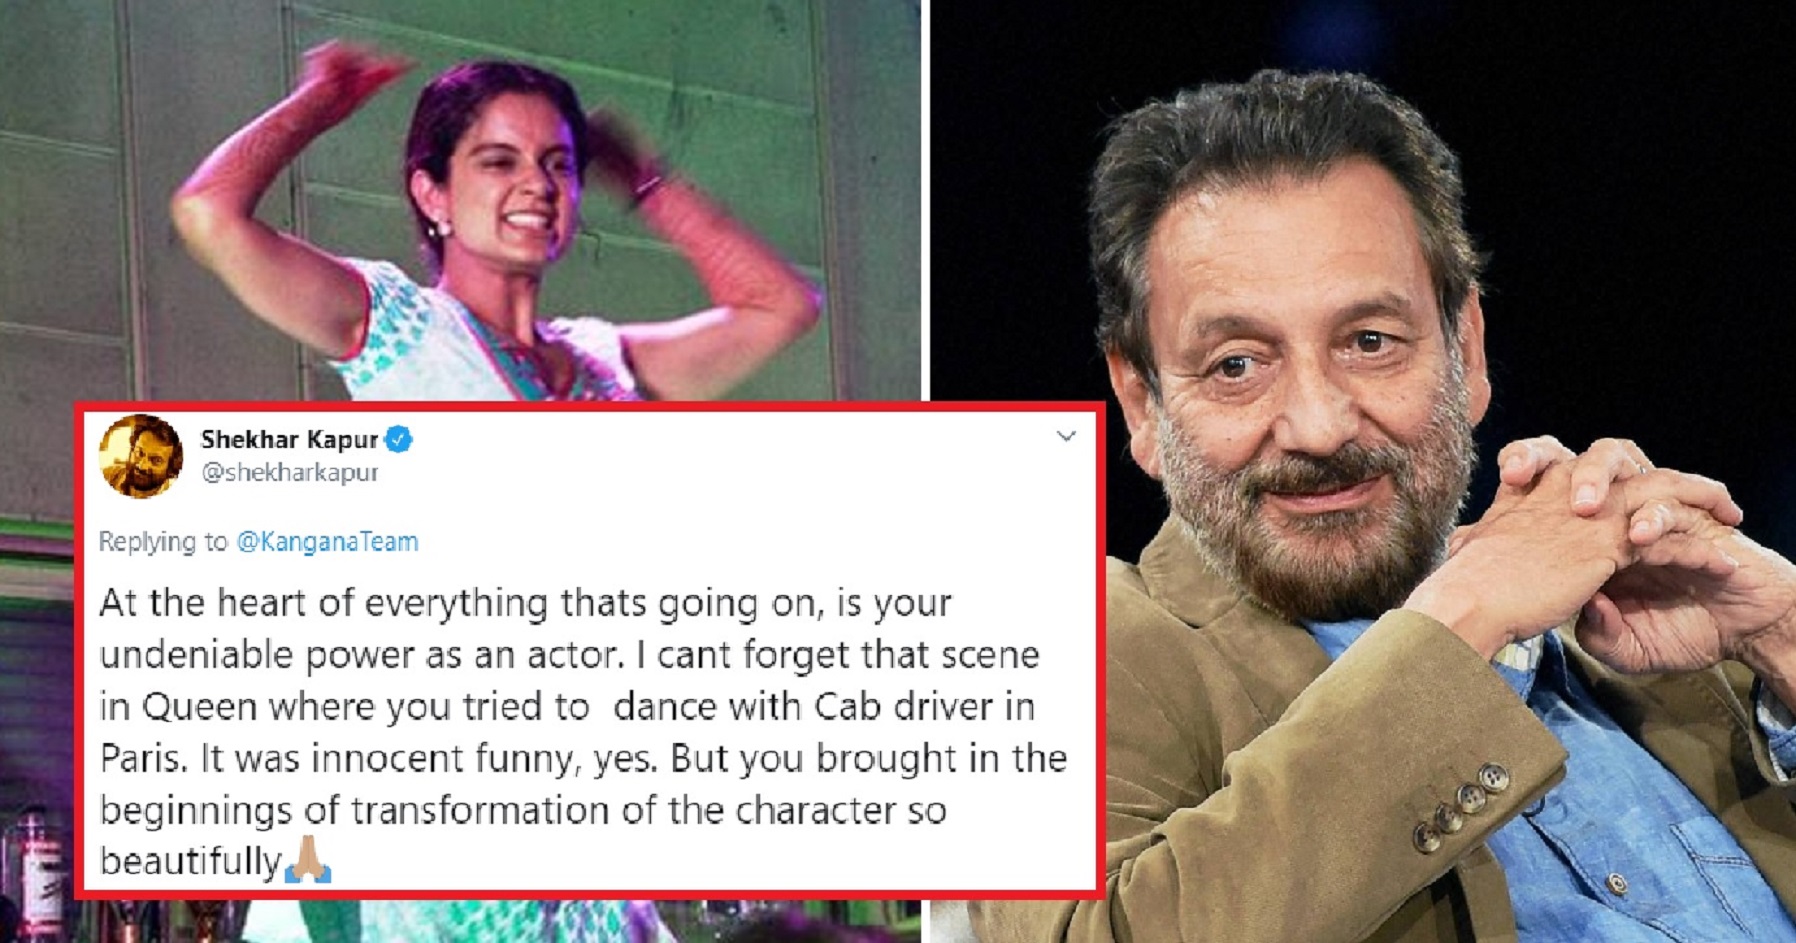 Shekhar Kapoor Praises Kangana Ranaut’s Act In ‘Queen’ and ‘Fashion’, Calling it ‘Genius Acting’